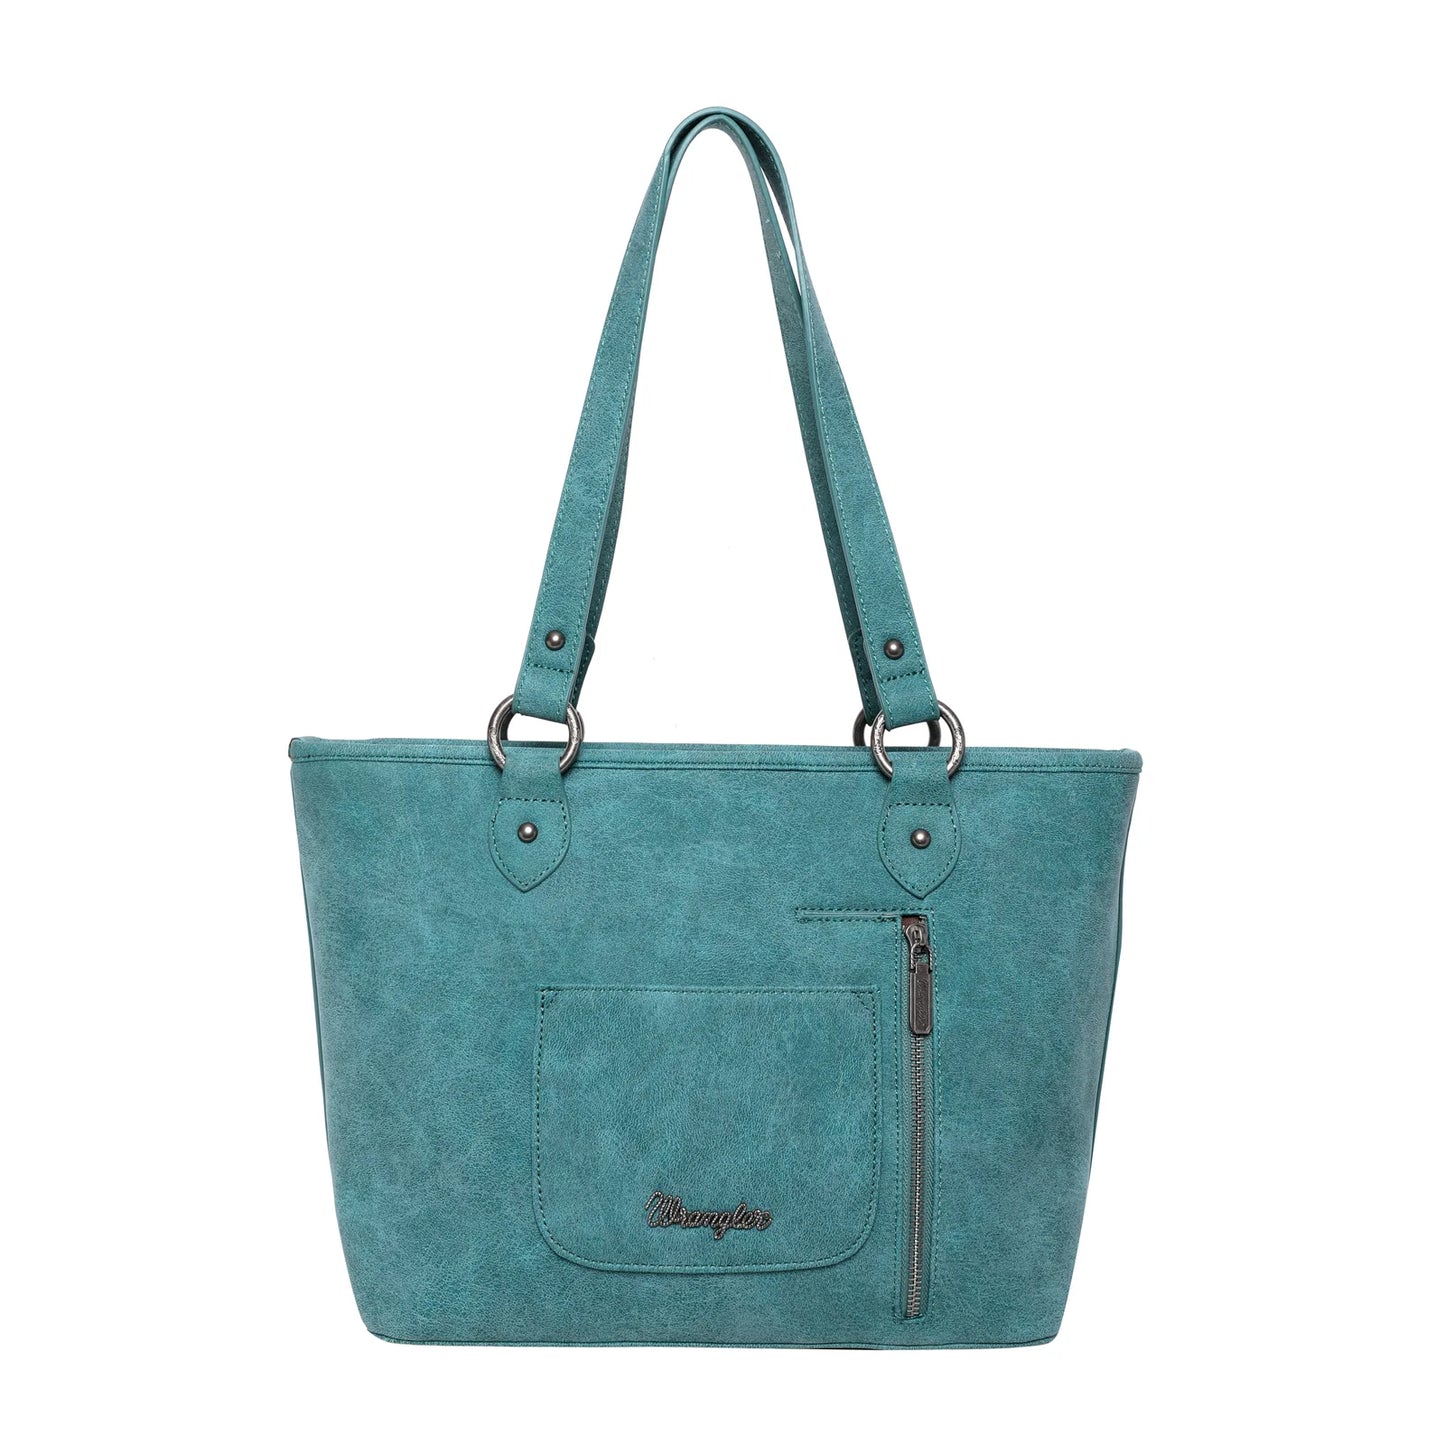 Wrangler Fringe Concealed Carry Bag- Turquoise